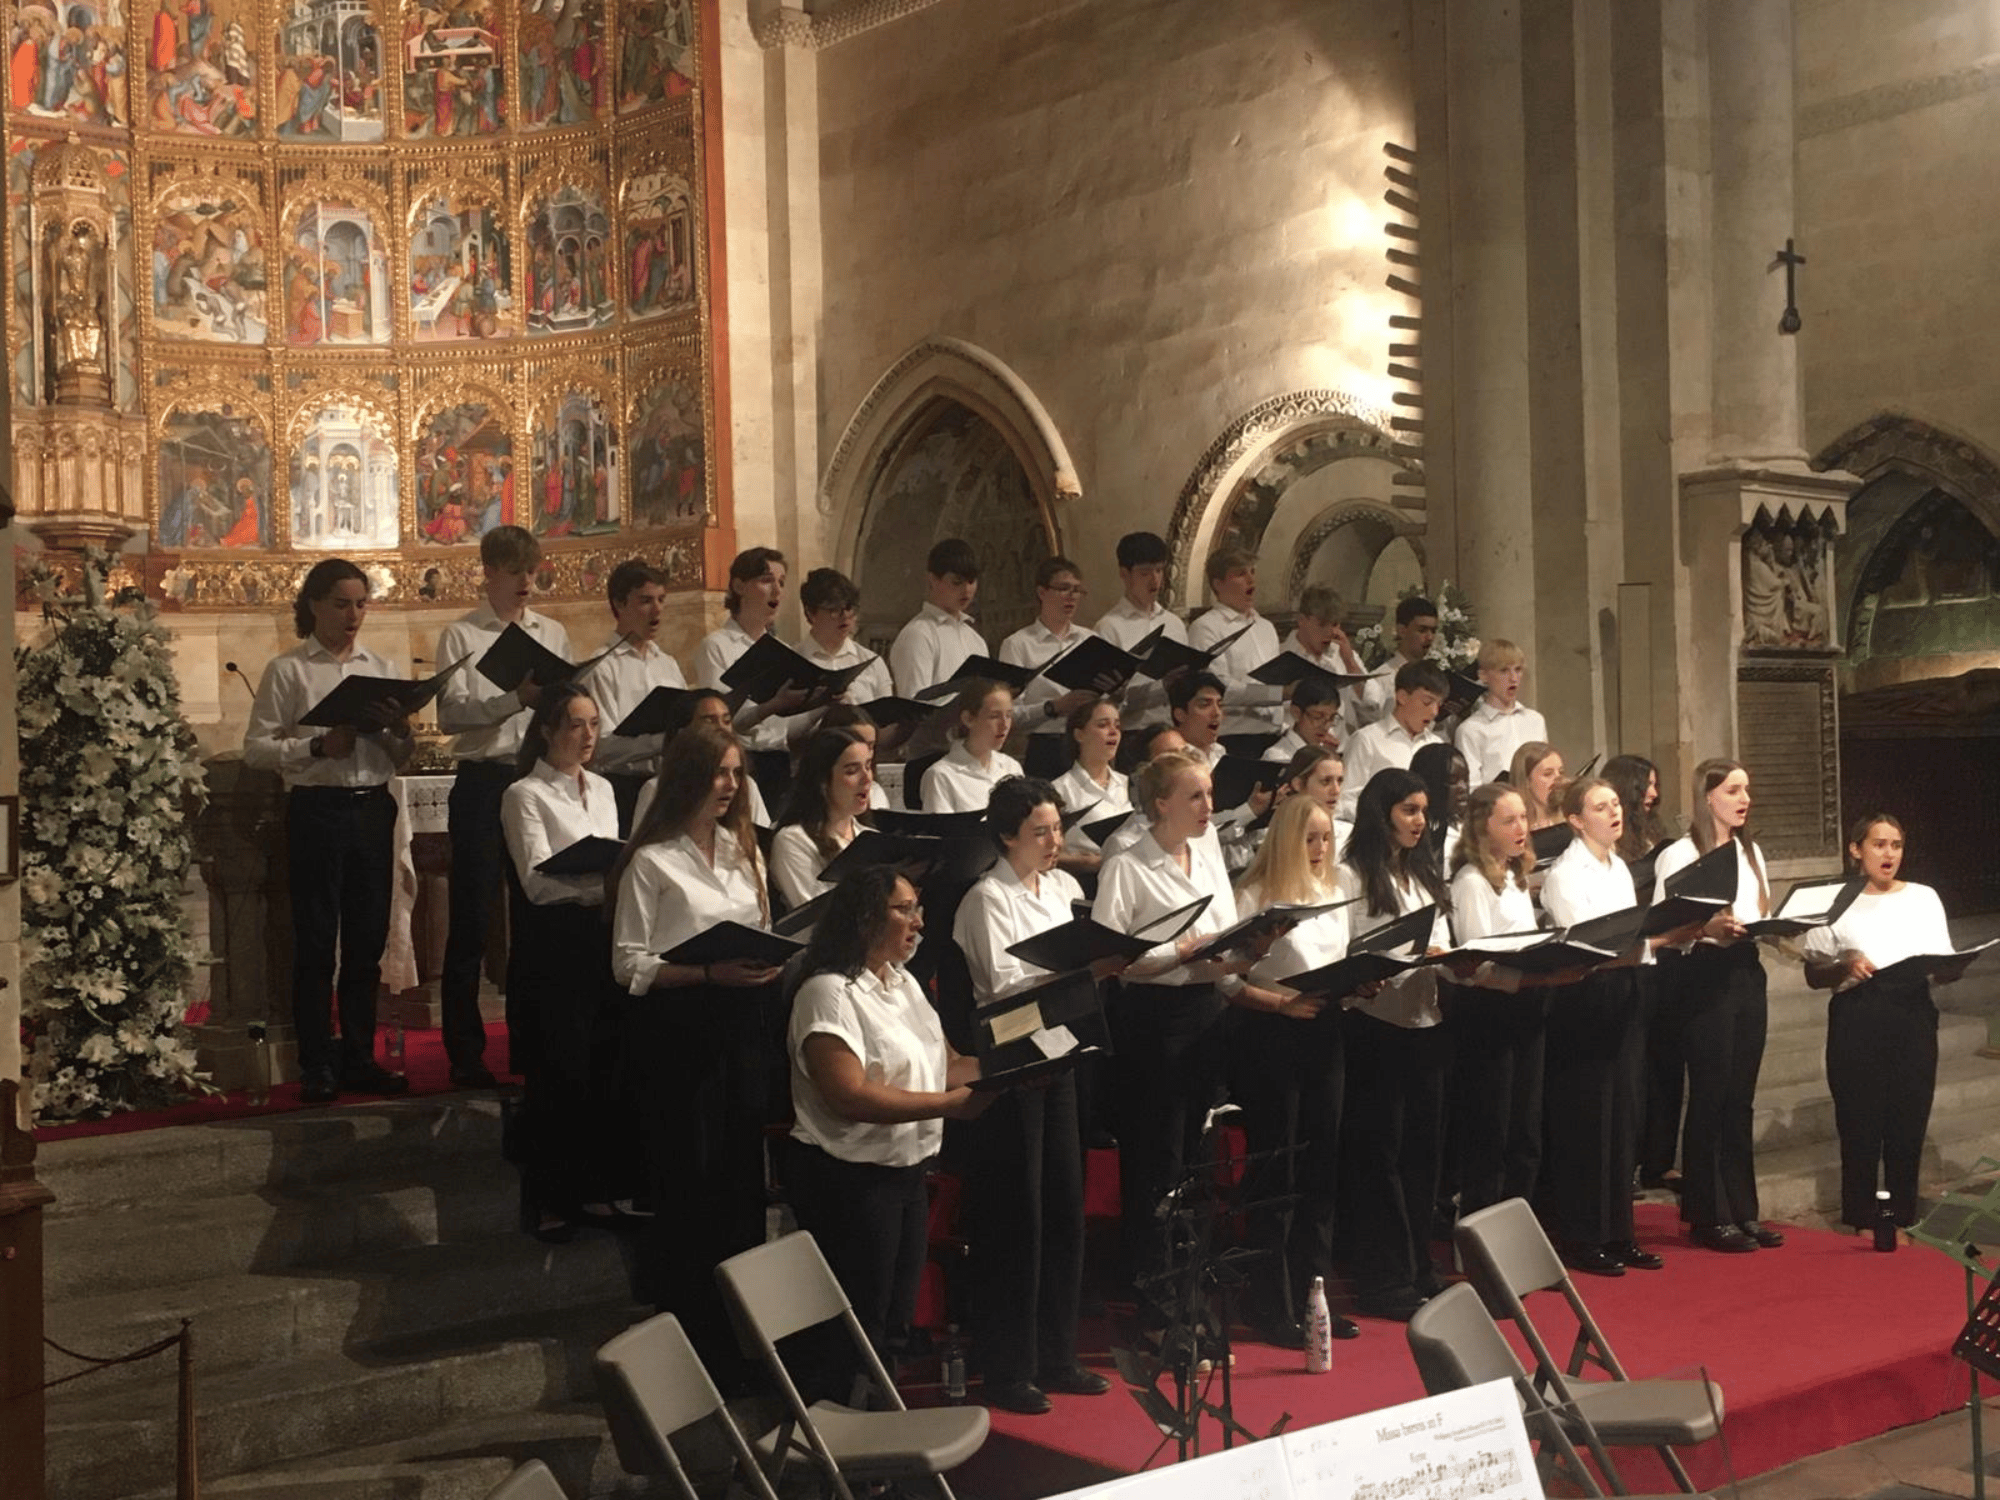 Choir sing in church in Spain